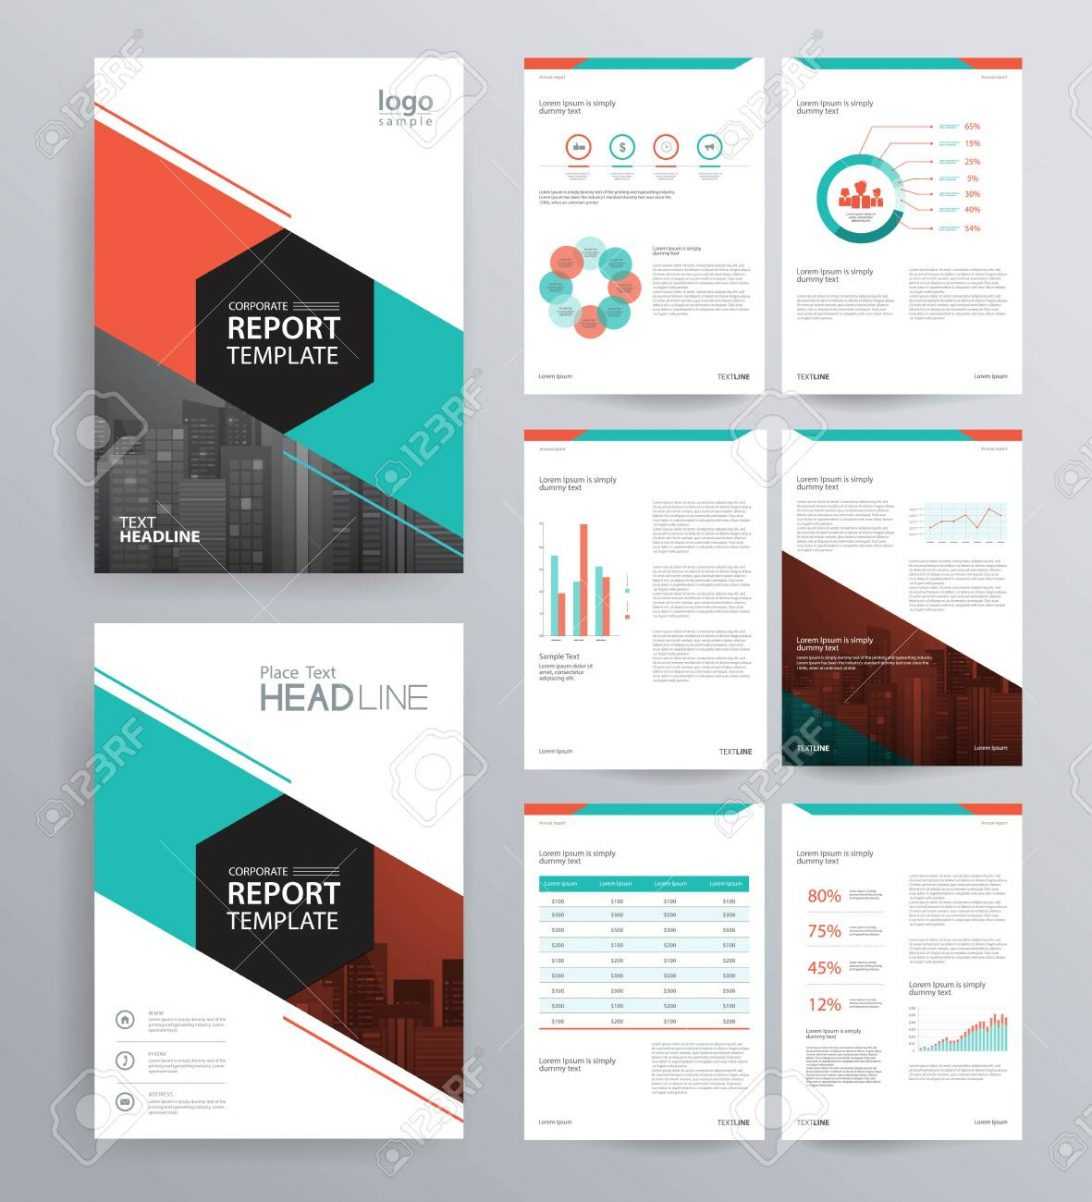 Annual Report Template Design For Company Profile Brochure Within Hr Annual Report Template